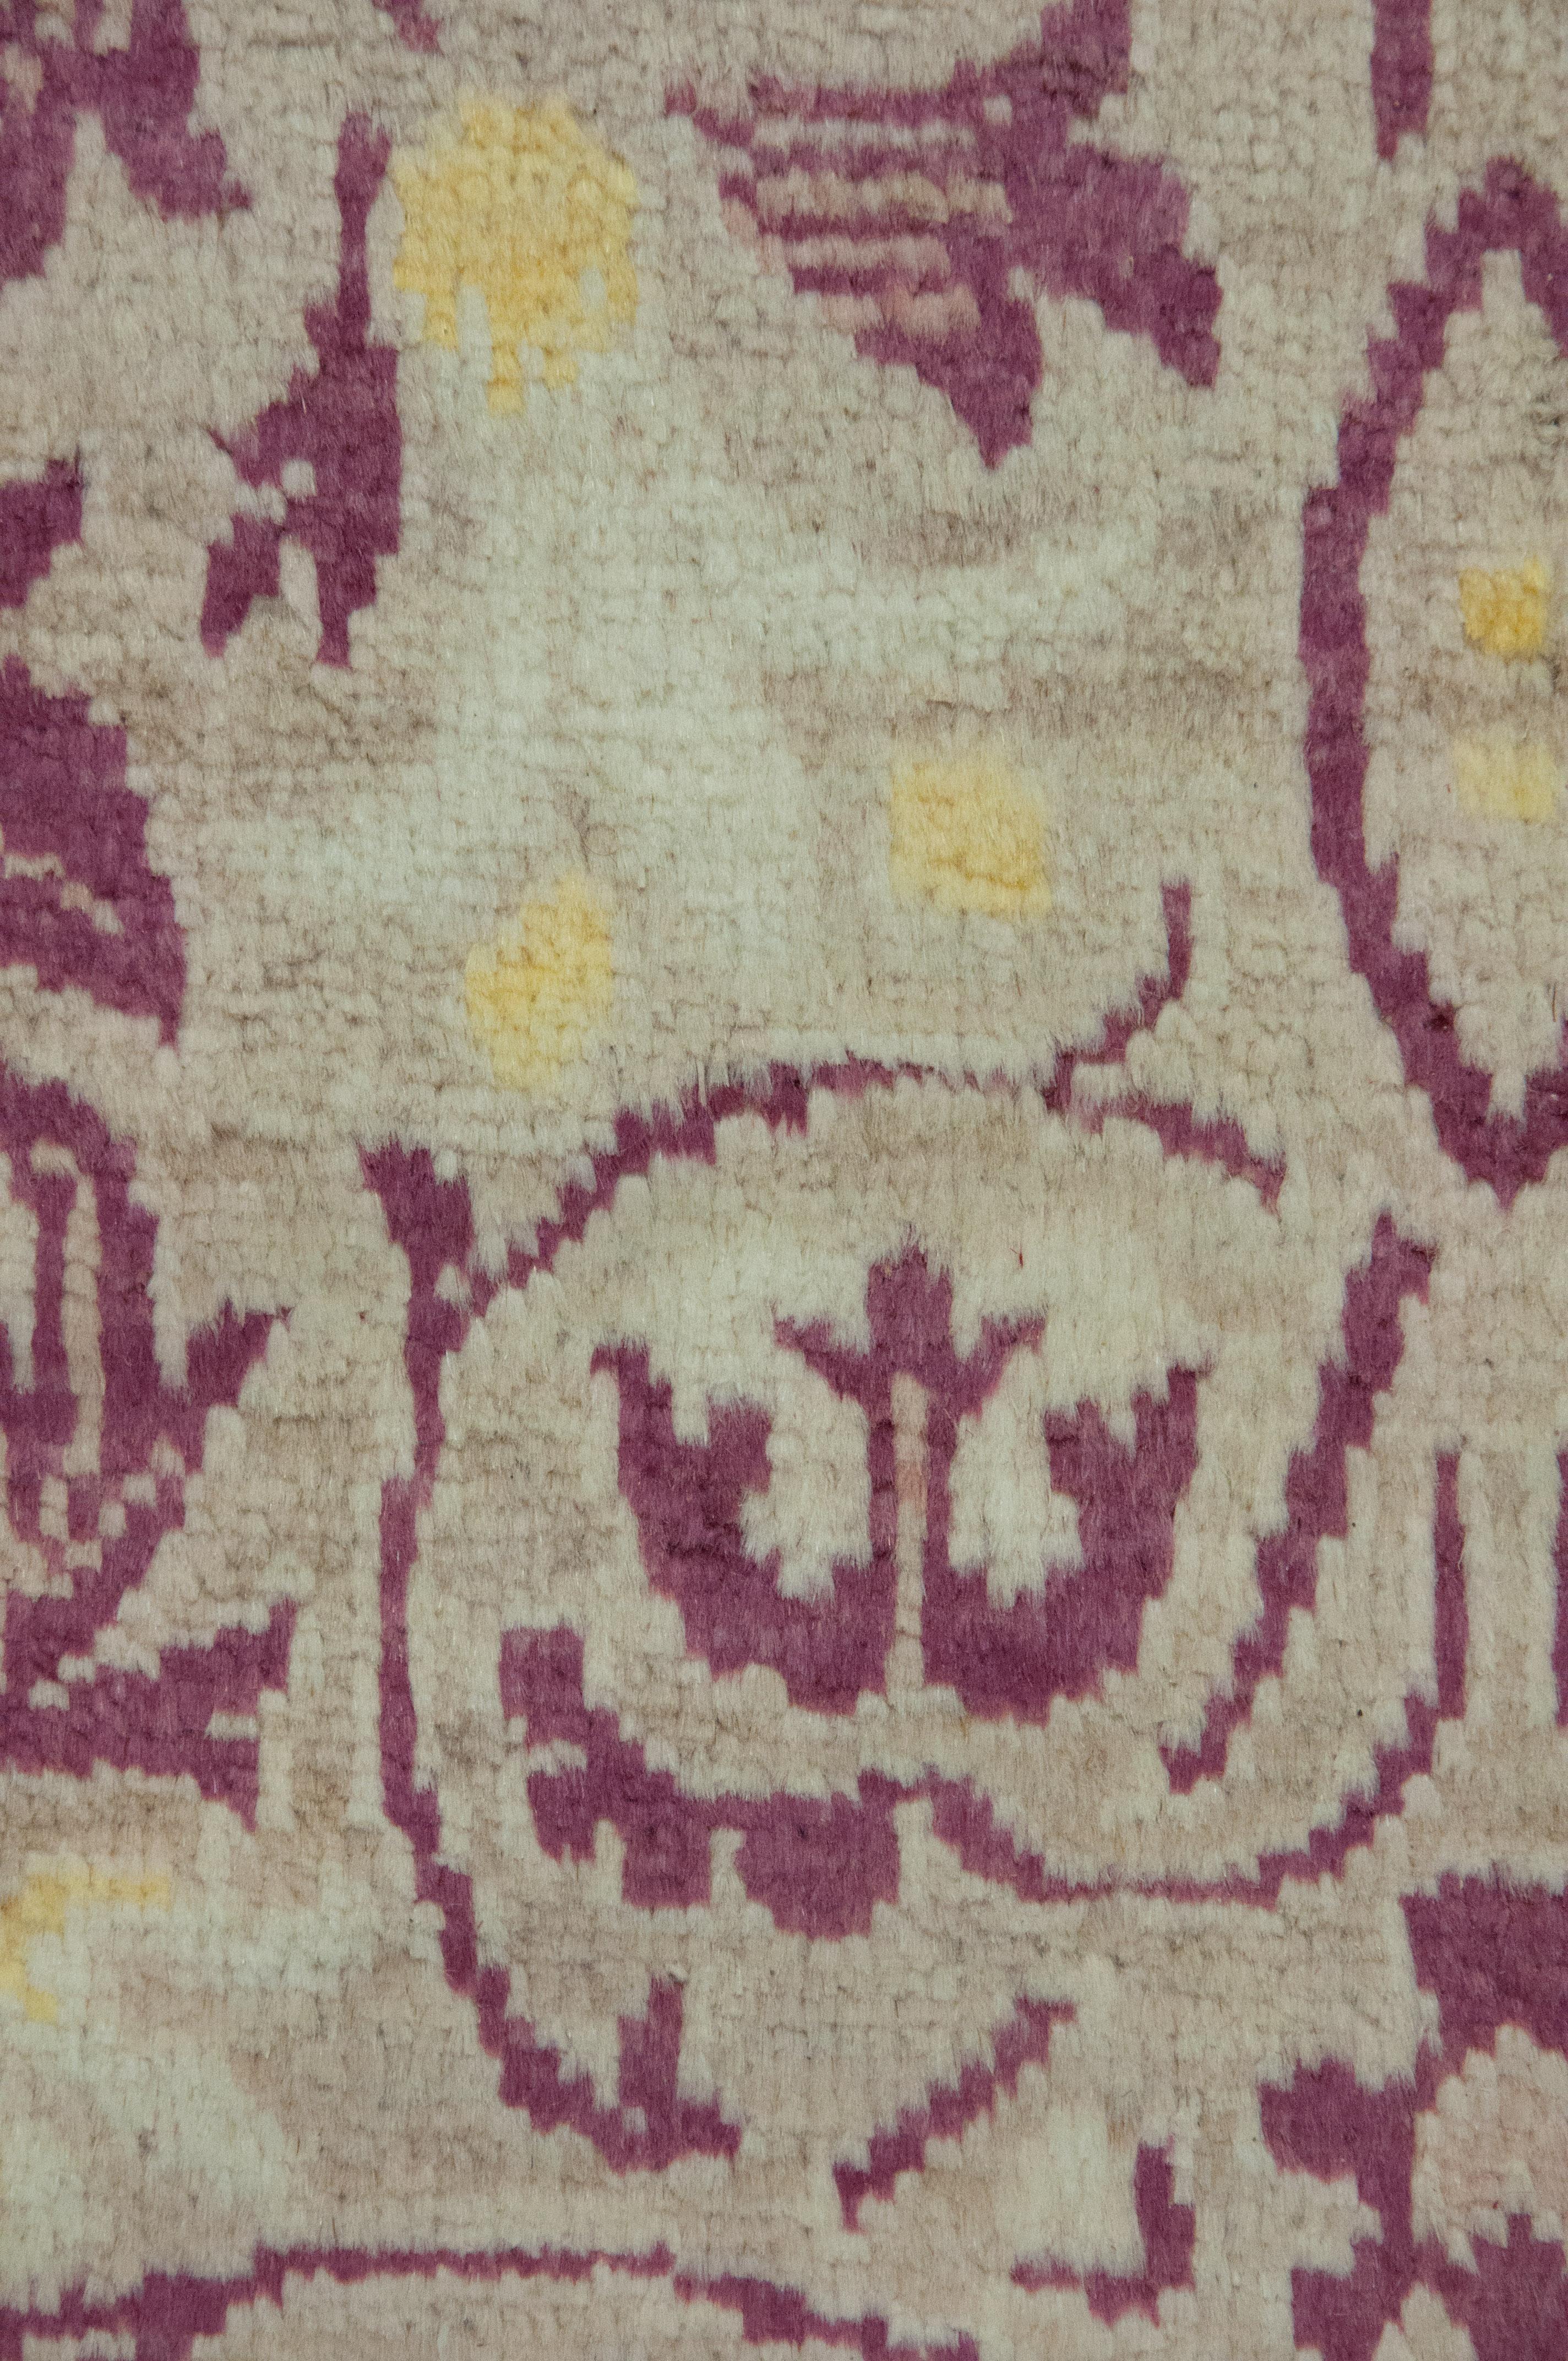 Pakistani One-of-a-Kind Oriental Silky Oushak Wool Handmade Area Rug, Sepia, 9' 1 x 11' 9